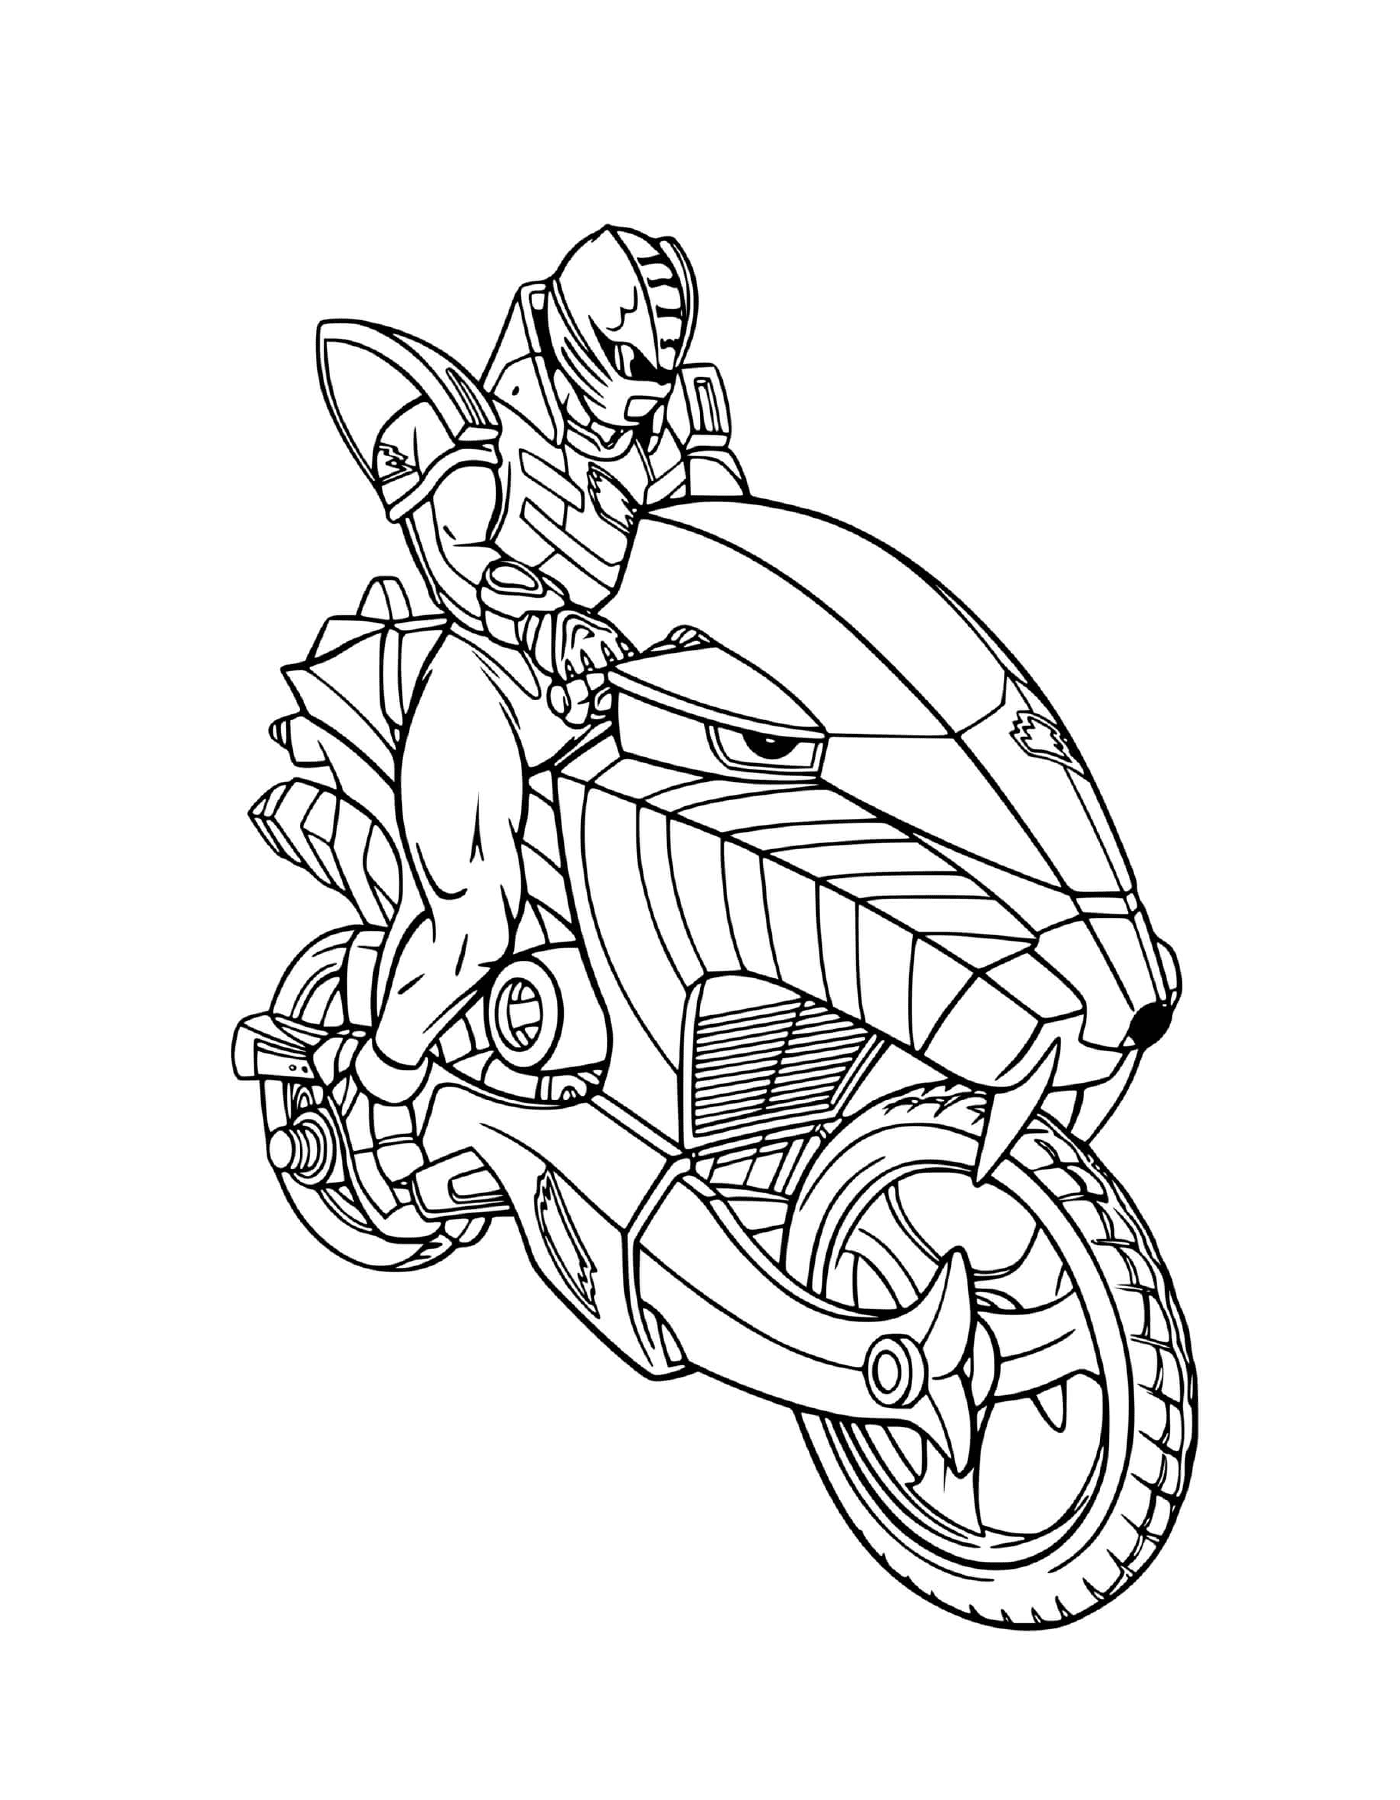  Speed power rangers motorcycle 